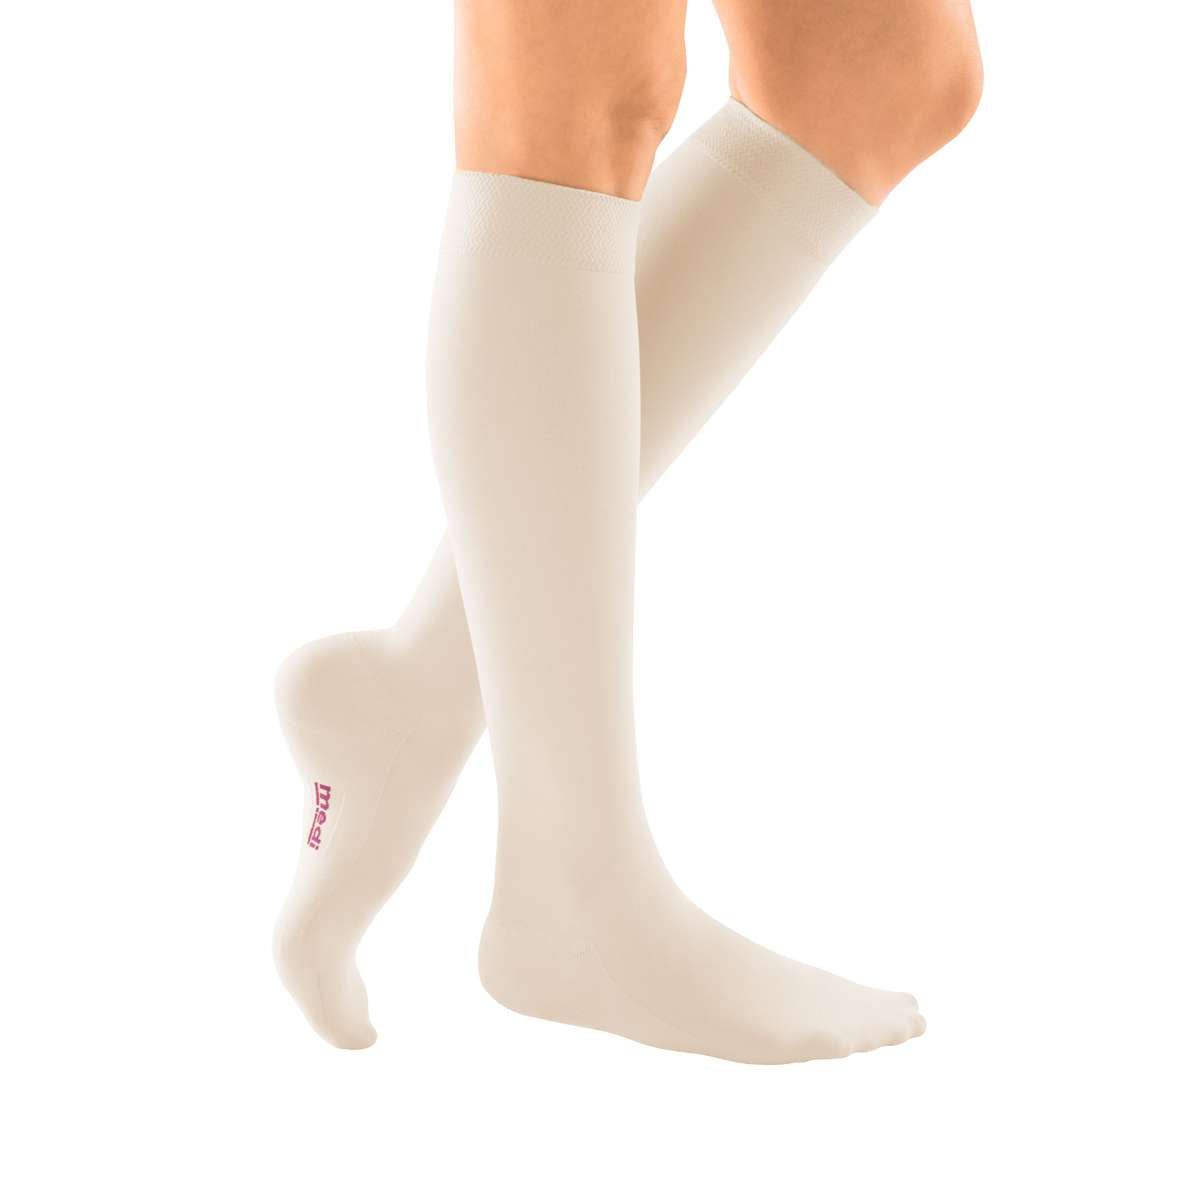 mediven comfort 20-30 mmHg calf closed toe standard - medi connect